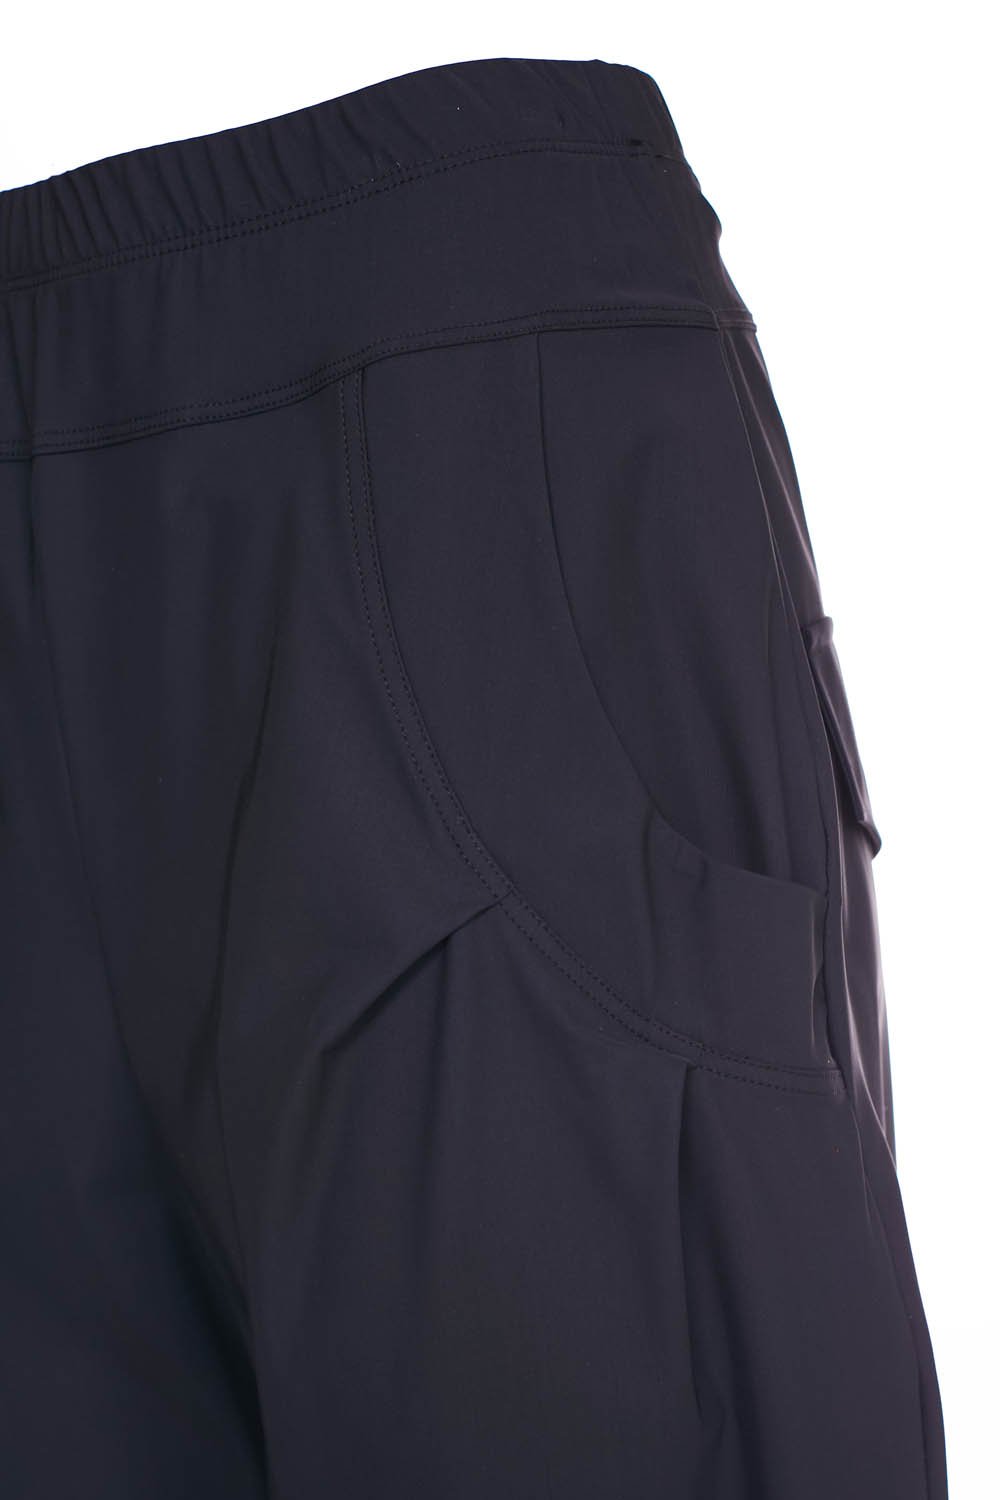 Naya Navy Cuff Trousers - The Wardrobe Buncrana